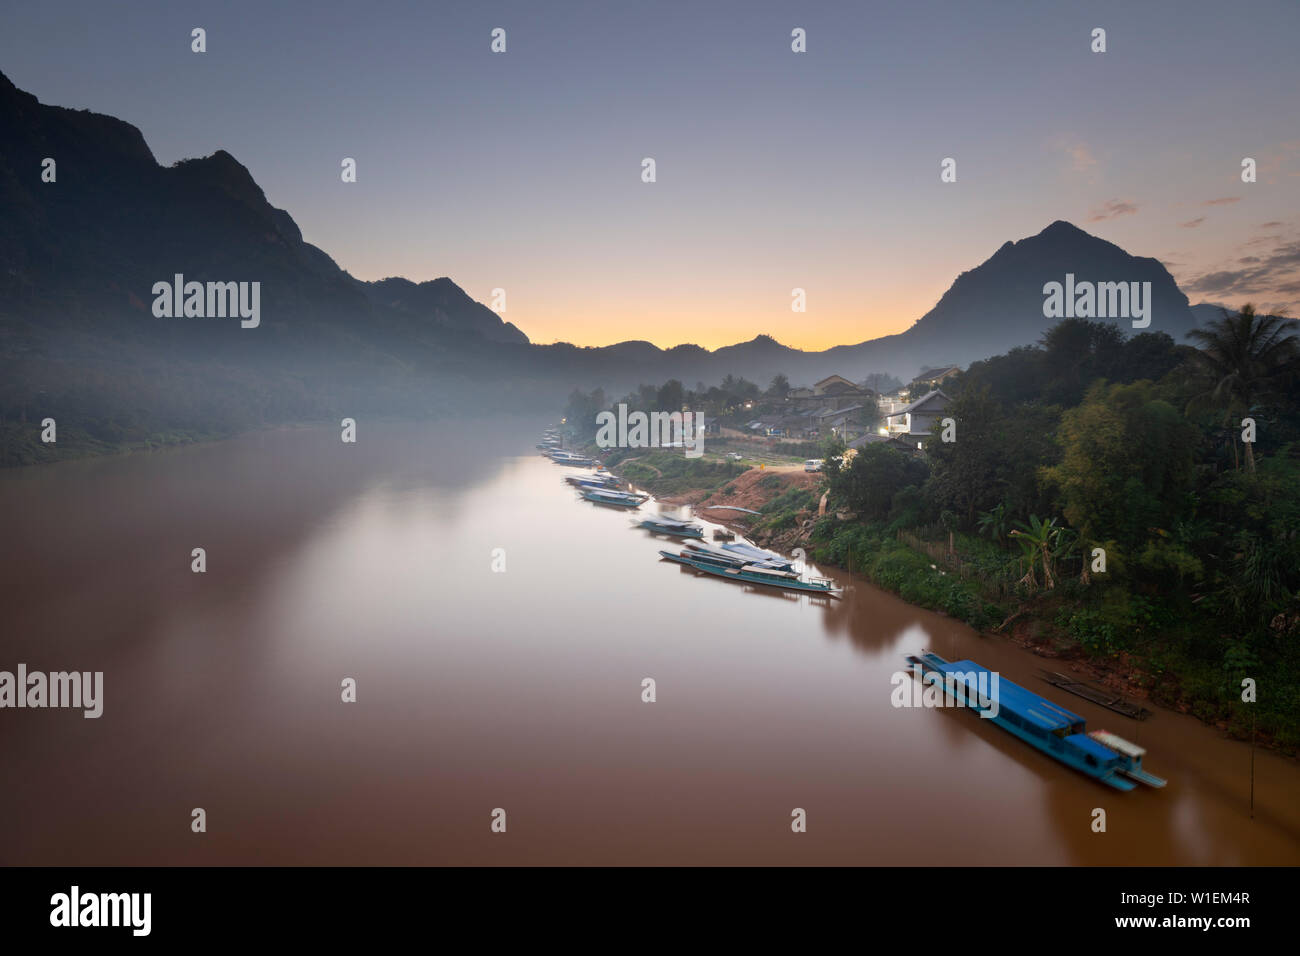 Sonnenuntergang über dem misty Nam Ou Fluss im Dorf Nong Khiaw, Provinz Luang Prabang Laos, Laos, Indochina, Südostasien, Asien Stockfoto